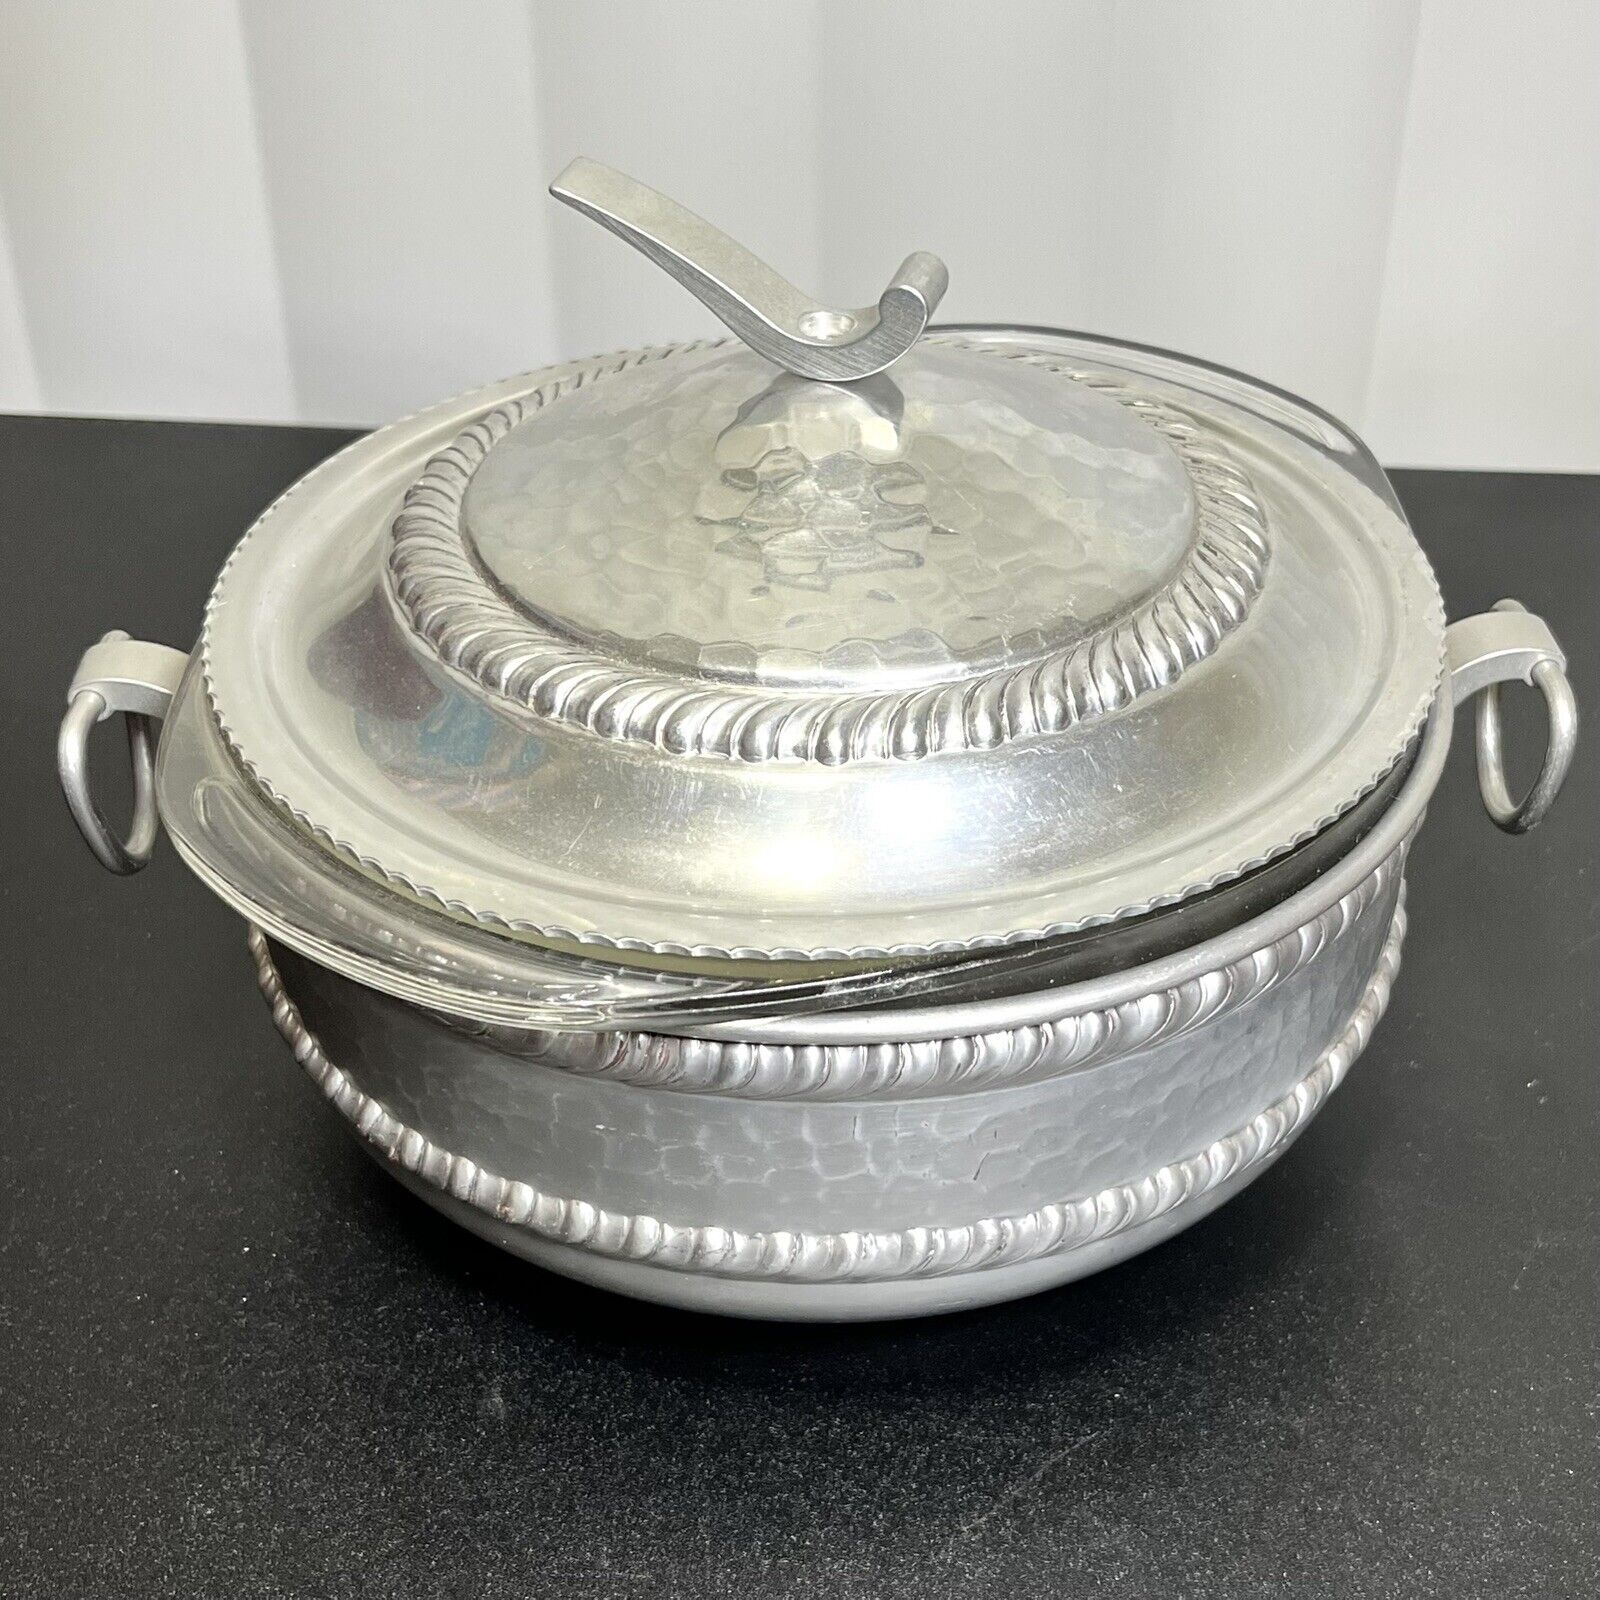 VTG 8” Pyrex Casserole Dish Bowl With Handled Hammered Aluminum Lidded Carrier